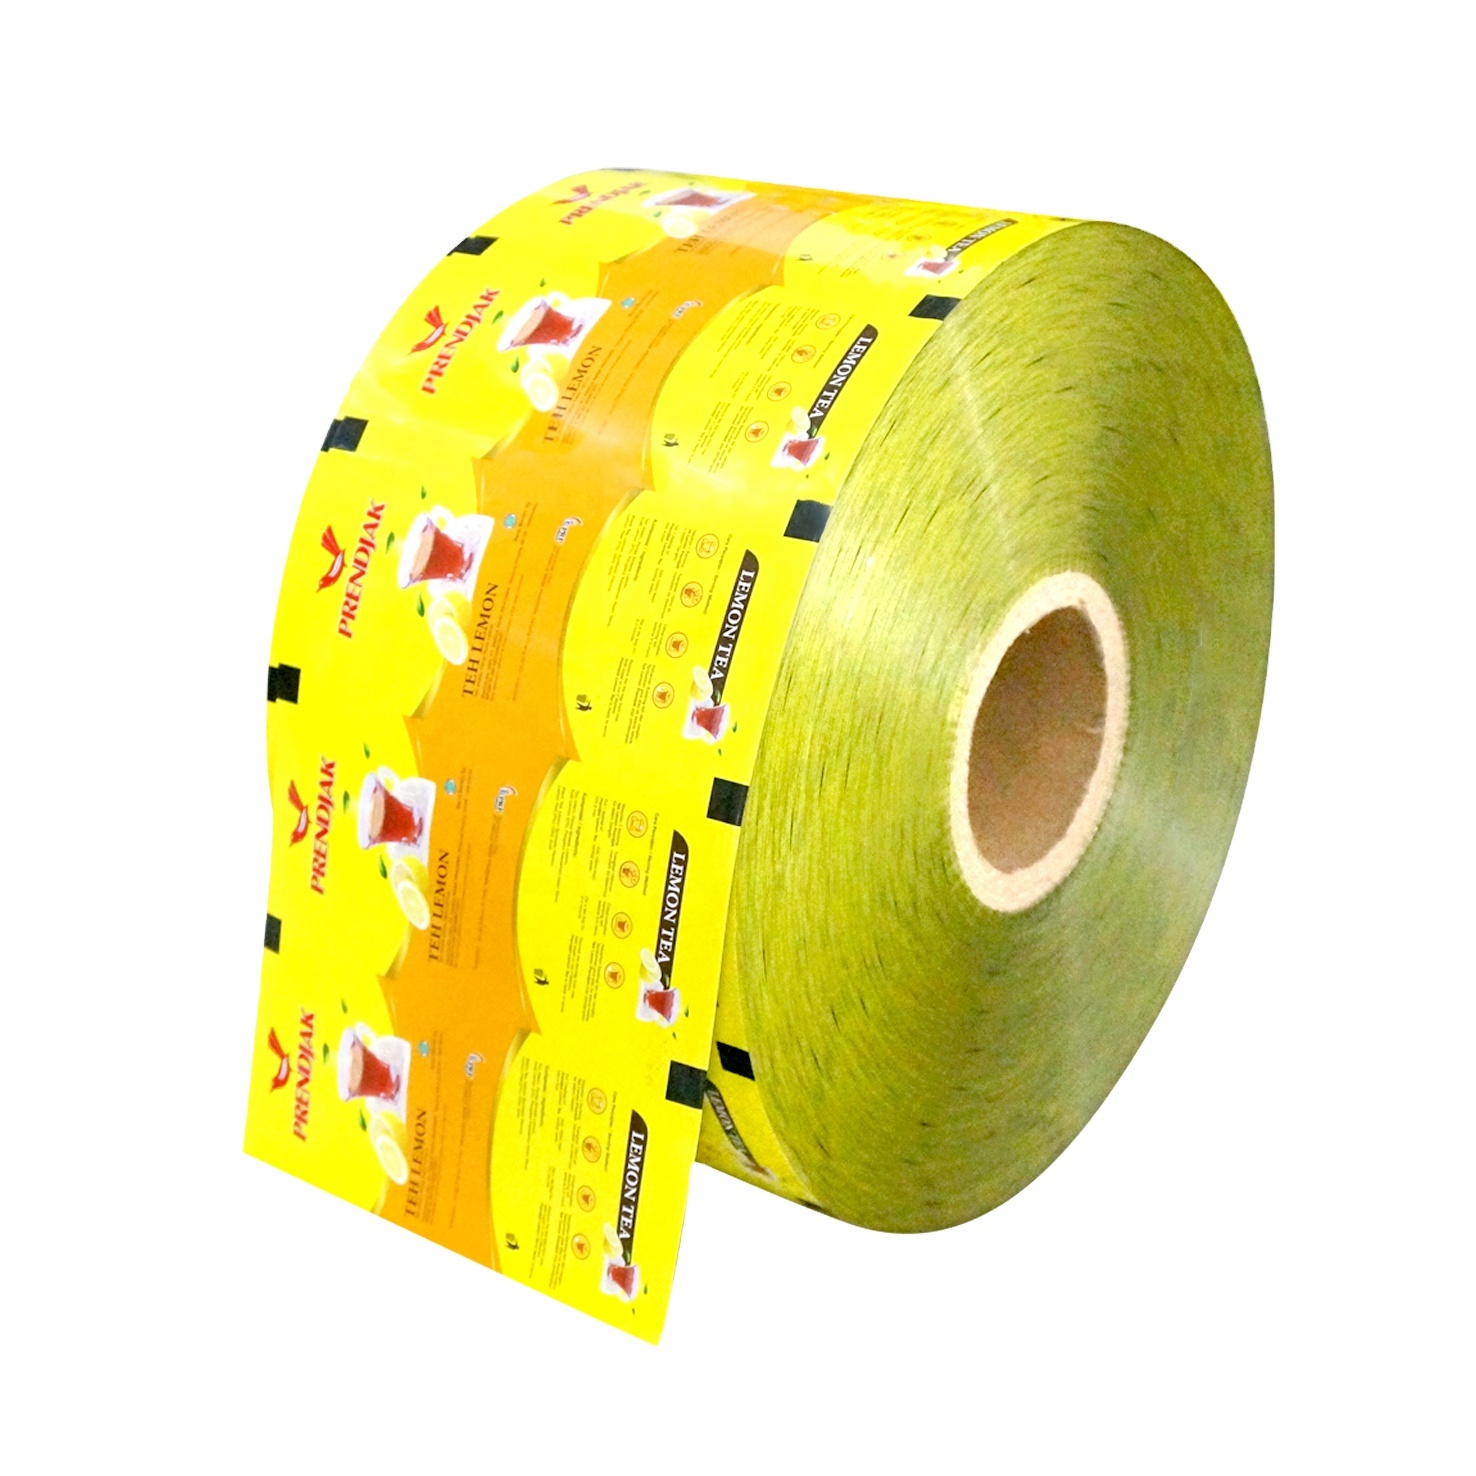 Food grade sachet packaging laminated pouch film custom printed plastic film rolls